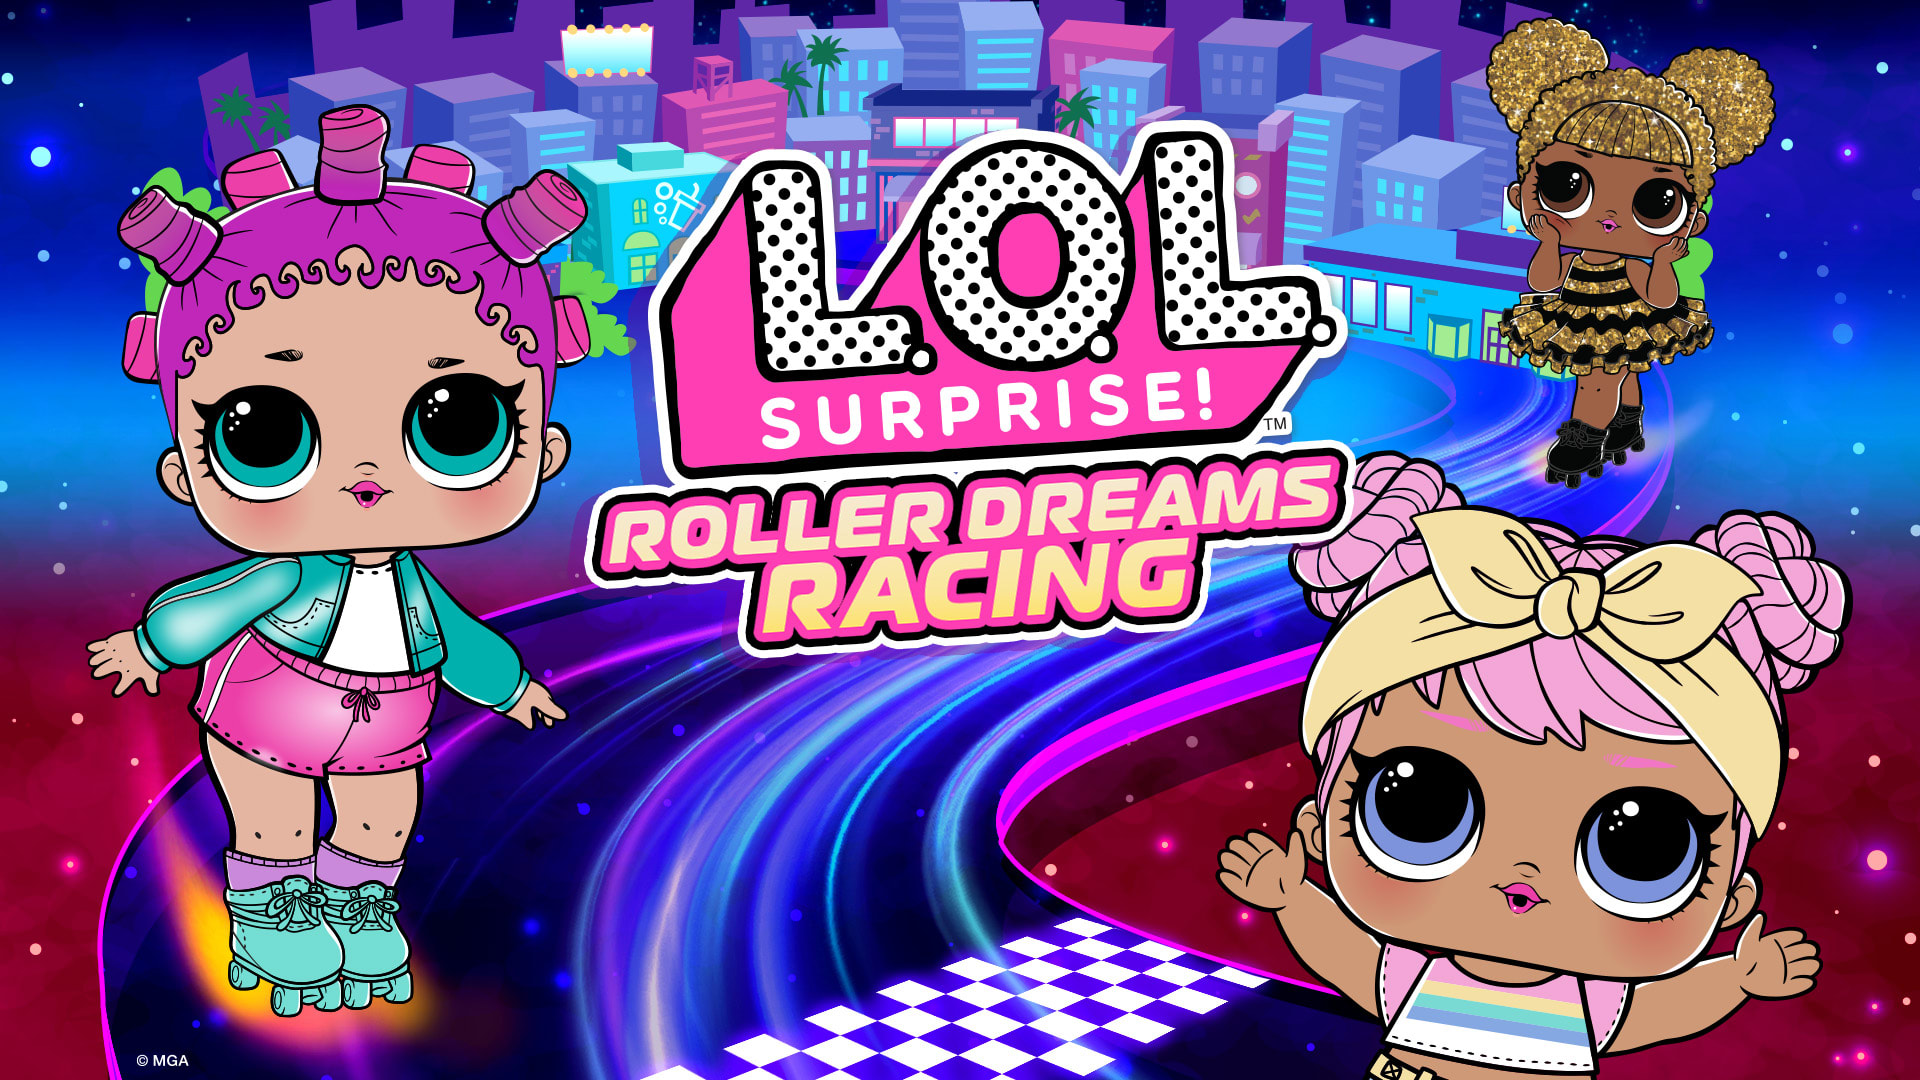 L.O.L. Surprise! Roller Dreams Racing